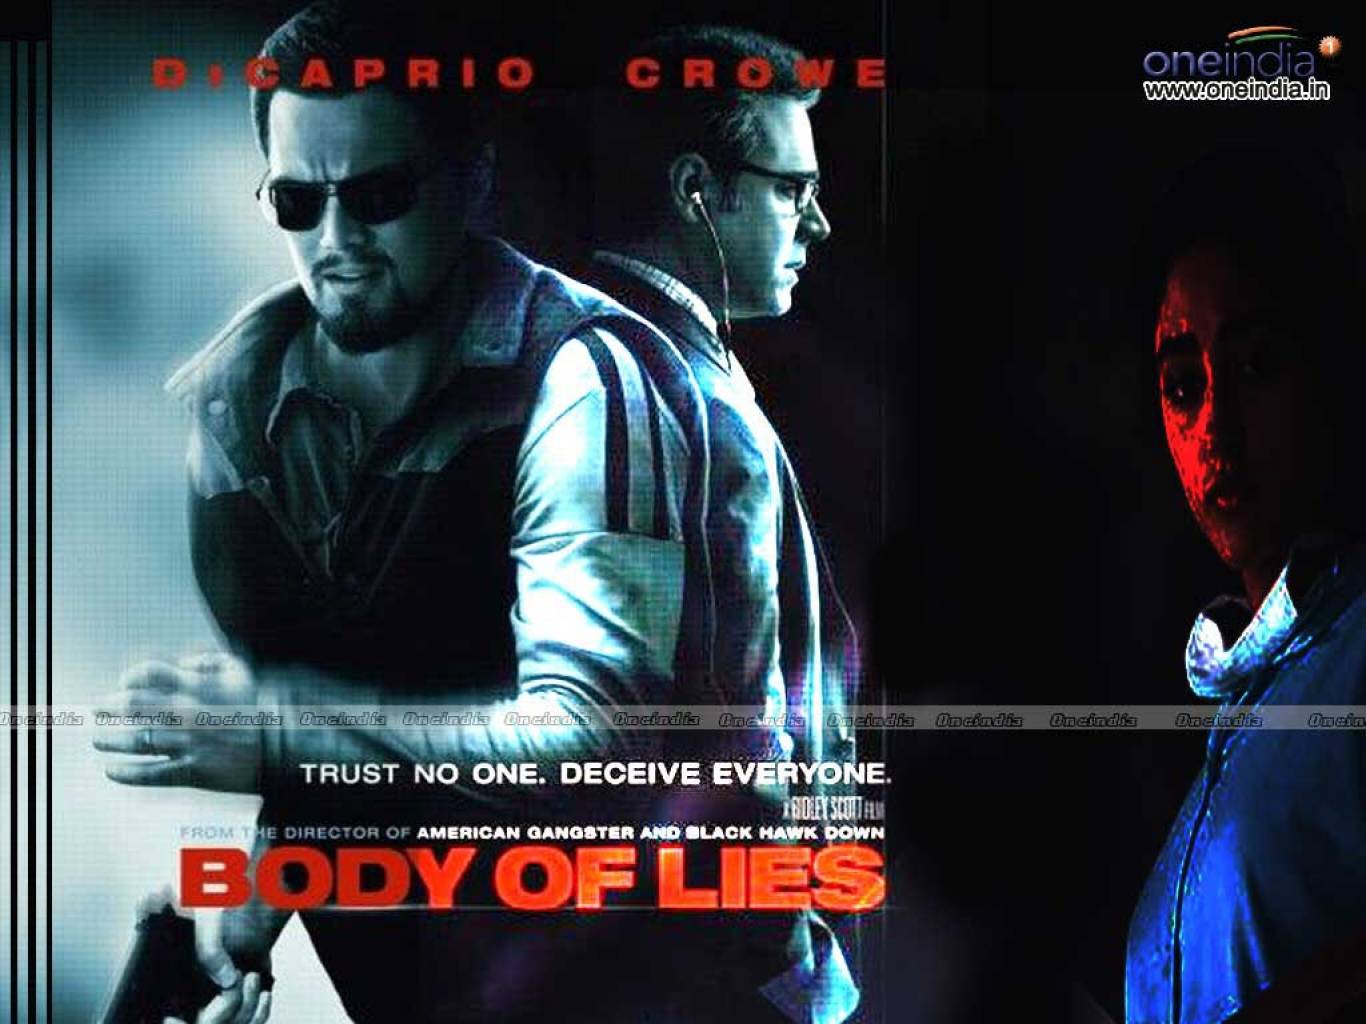 Body of Lies Movie HD Wallpaper. Body of Lies HD Movie Wallpaper Free Download (1080p to 2K)